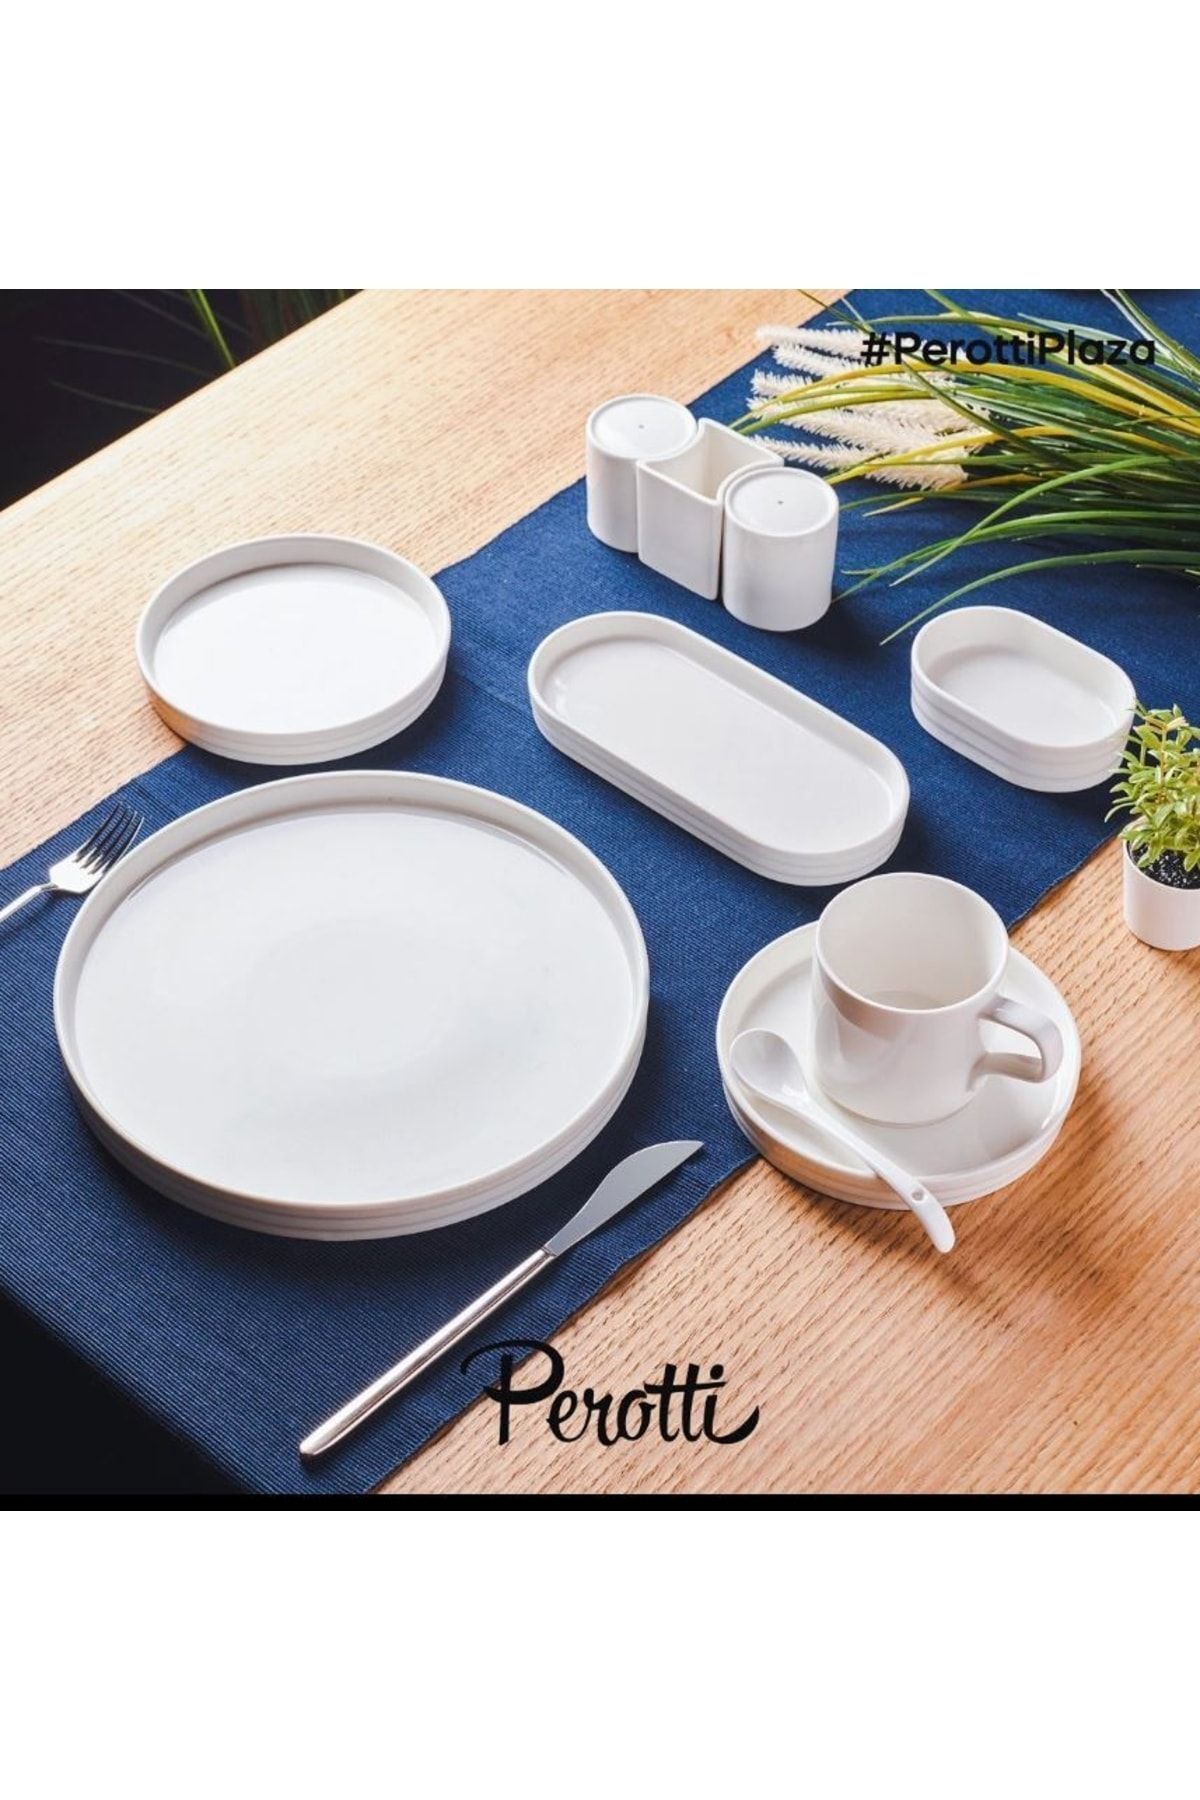 Rossel Premium Perotti Pagoro Porselen Kahvaltı Takımı 35 Parça 14339